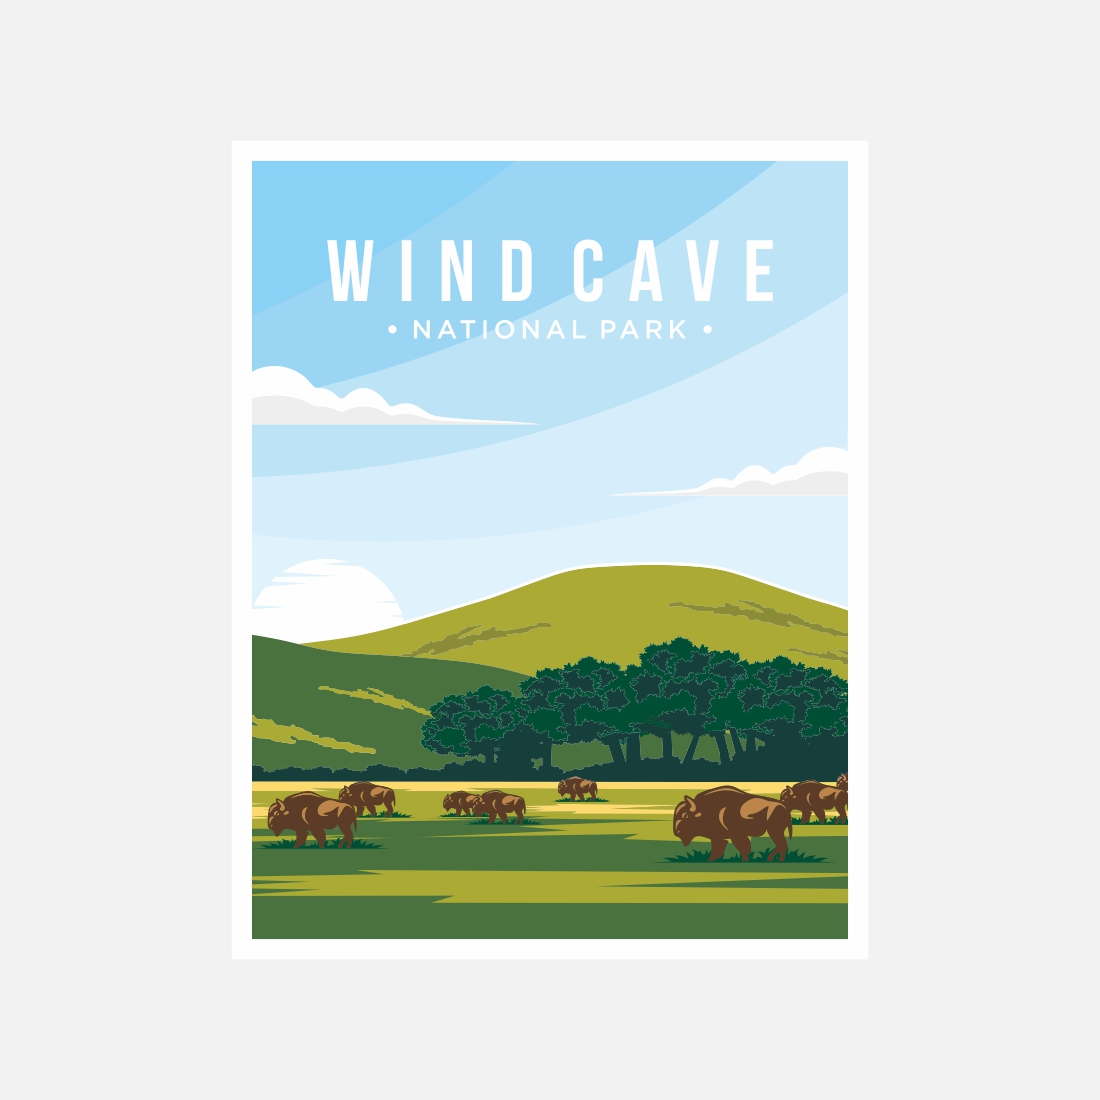 Wind Cave National Park poster vector illustration design – Only $8 cover image.